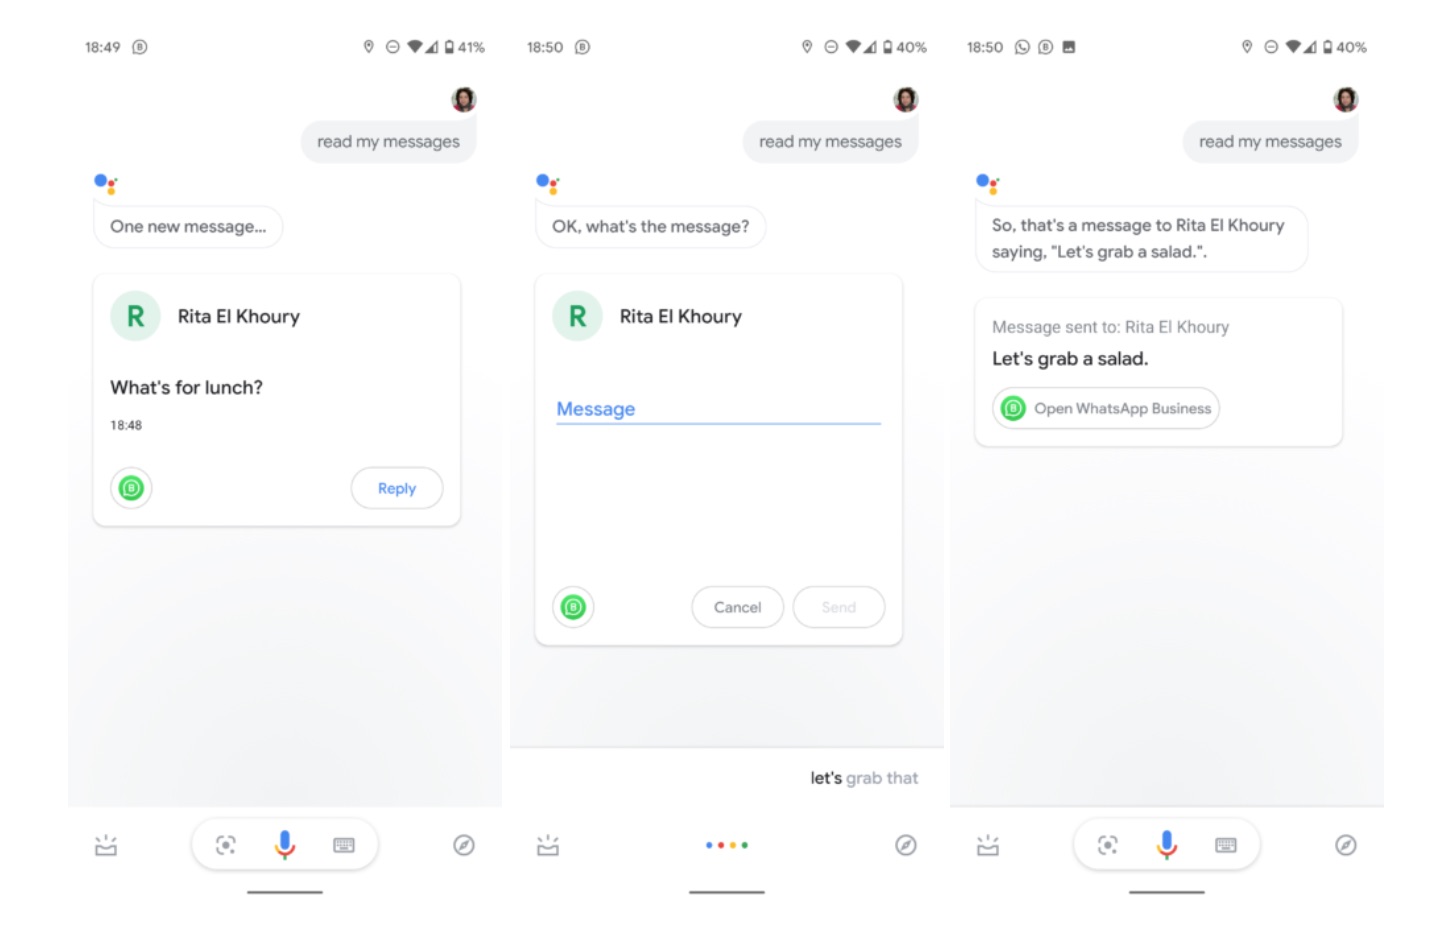 Google Assistant sekarang dapat membaca dan membalas aplikasi perpesanan lain